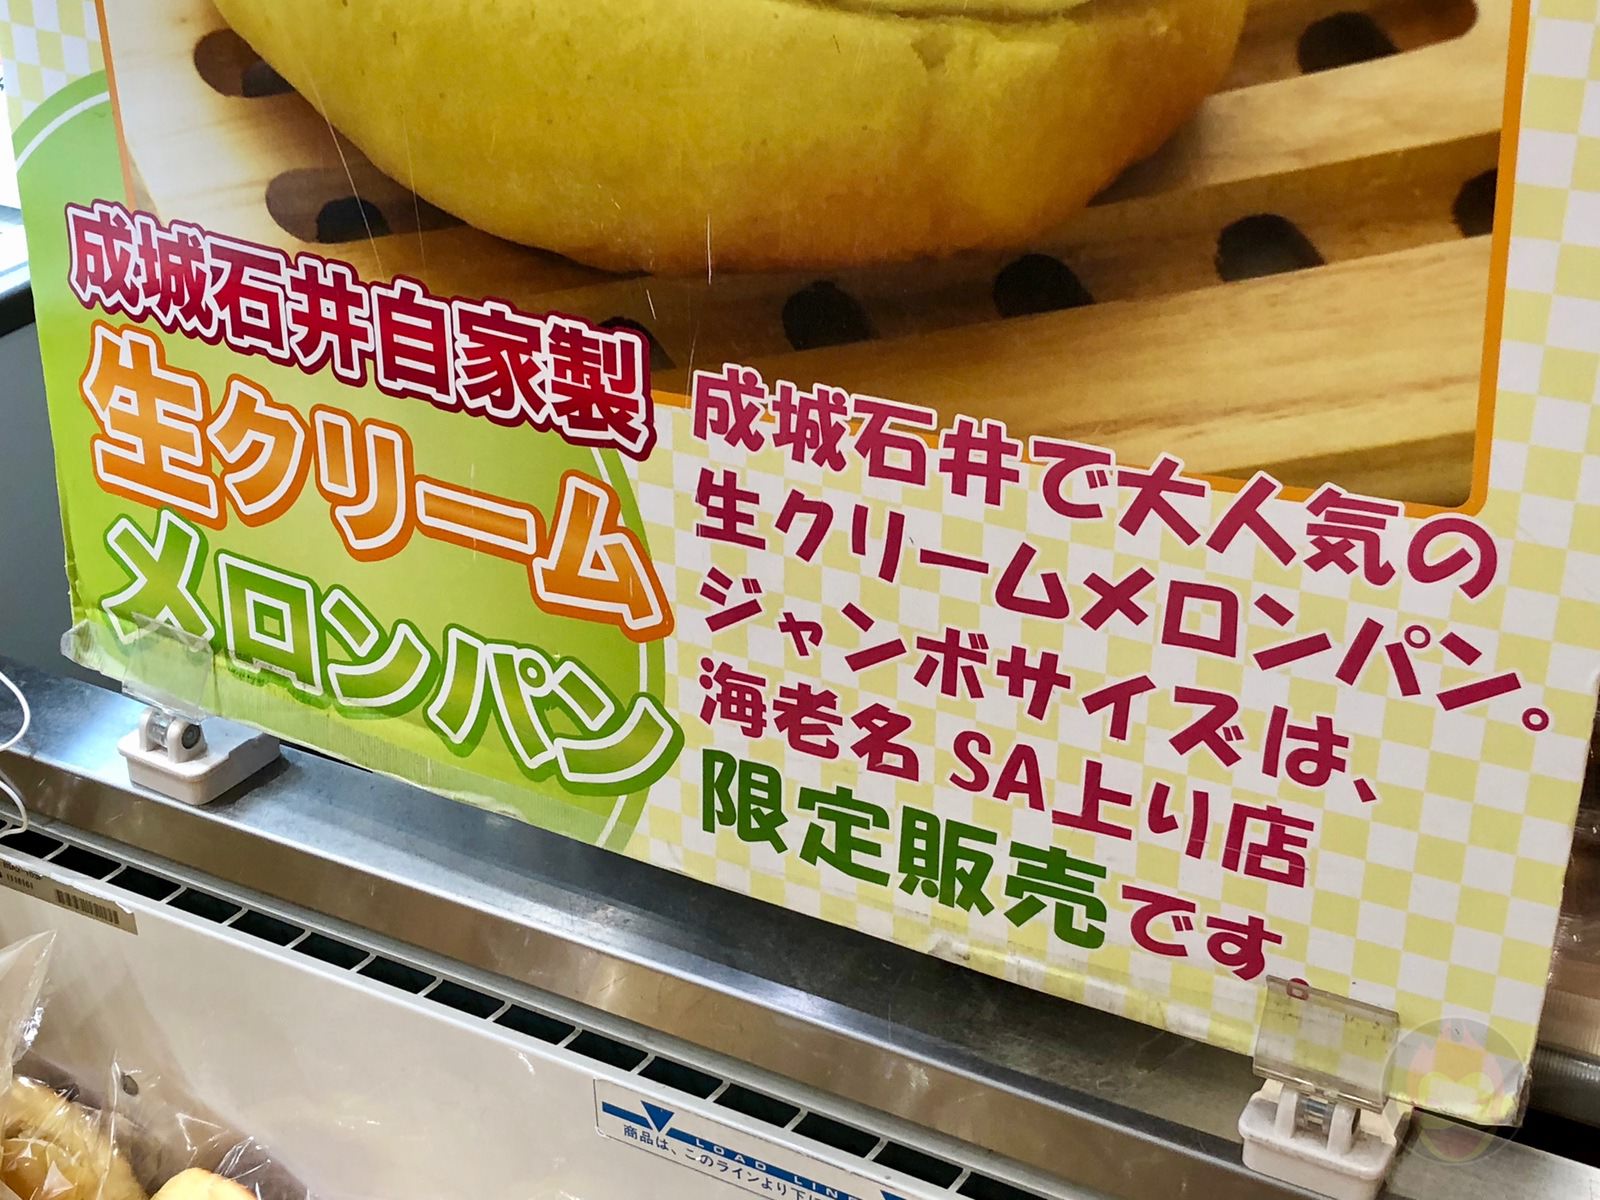 Ebina-Parking-Jumbo-Cream-Melon-Pan-Seijo-Ishii-03.jpg